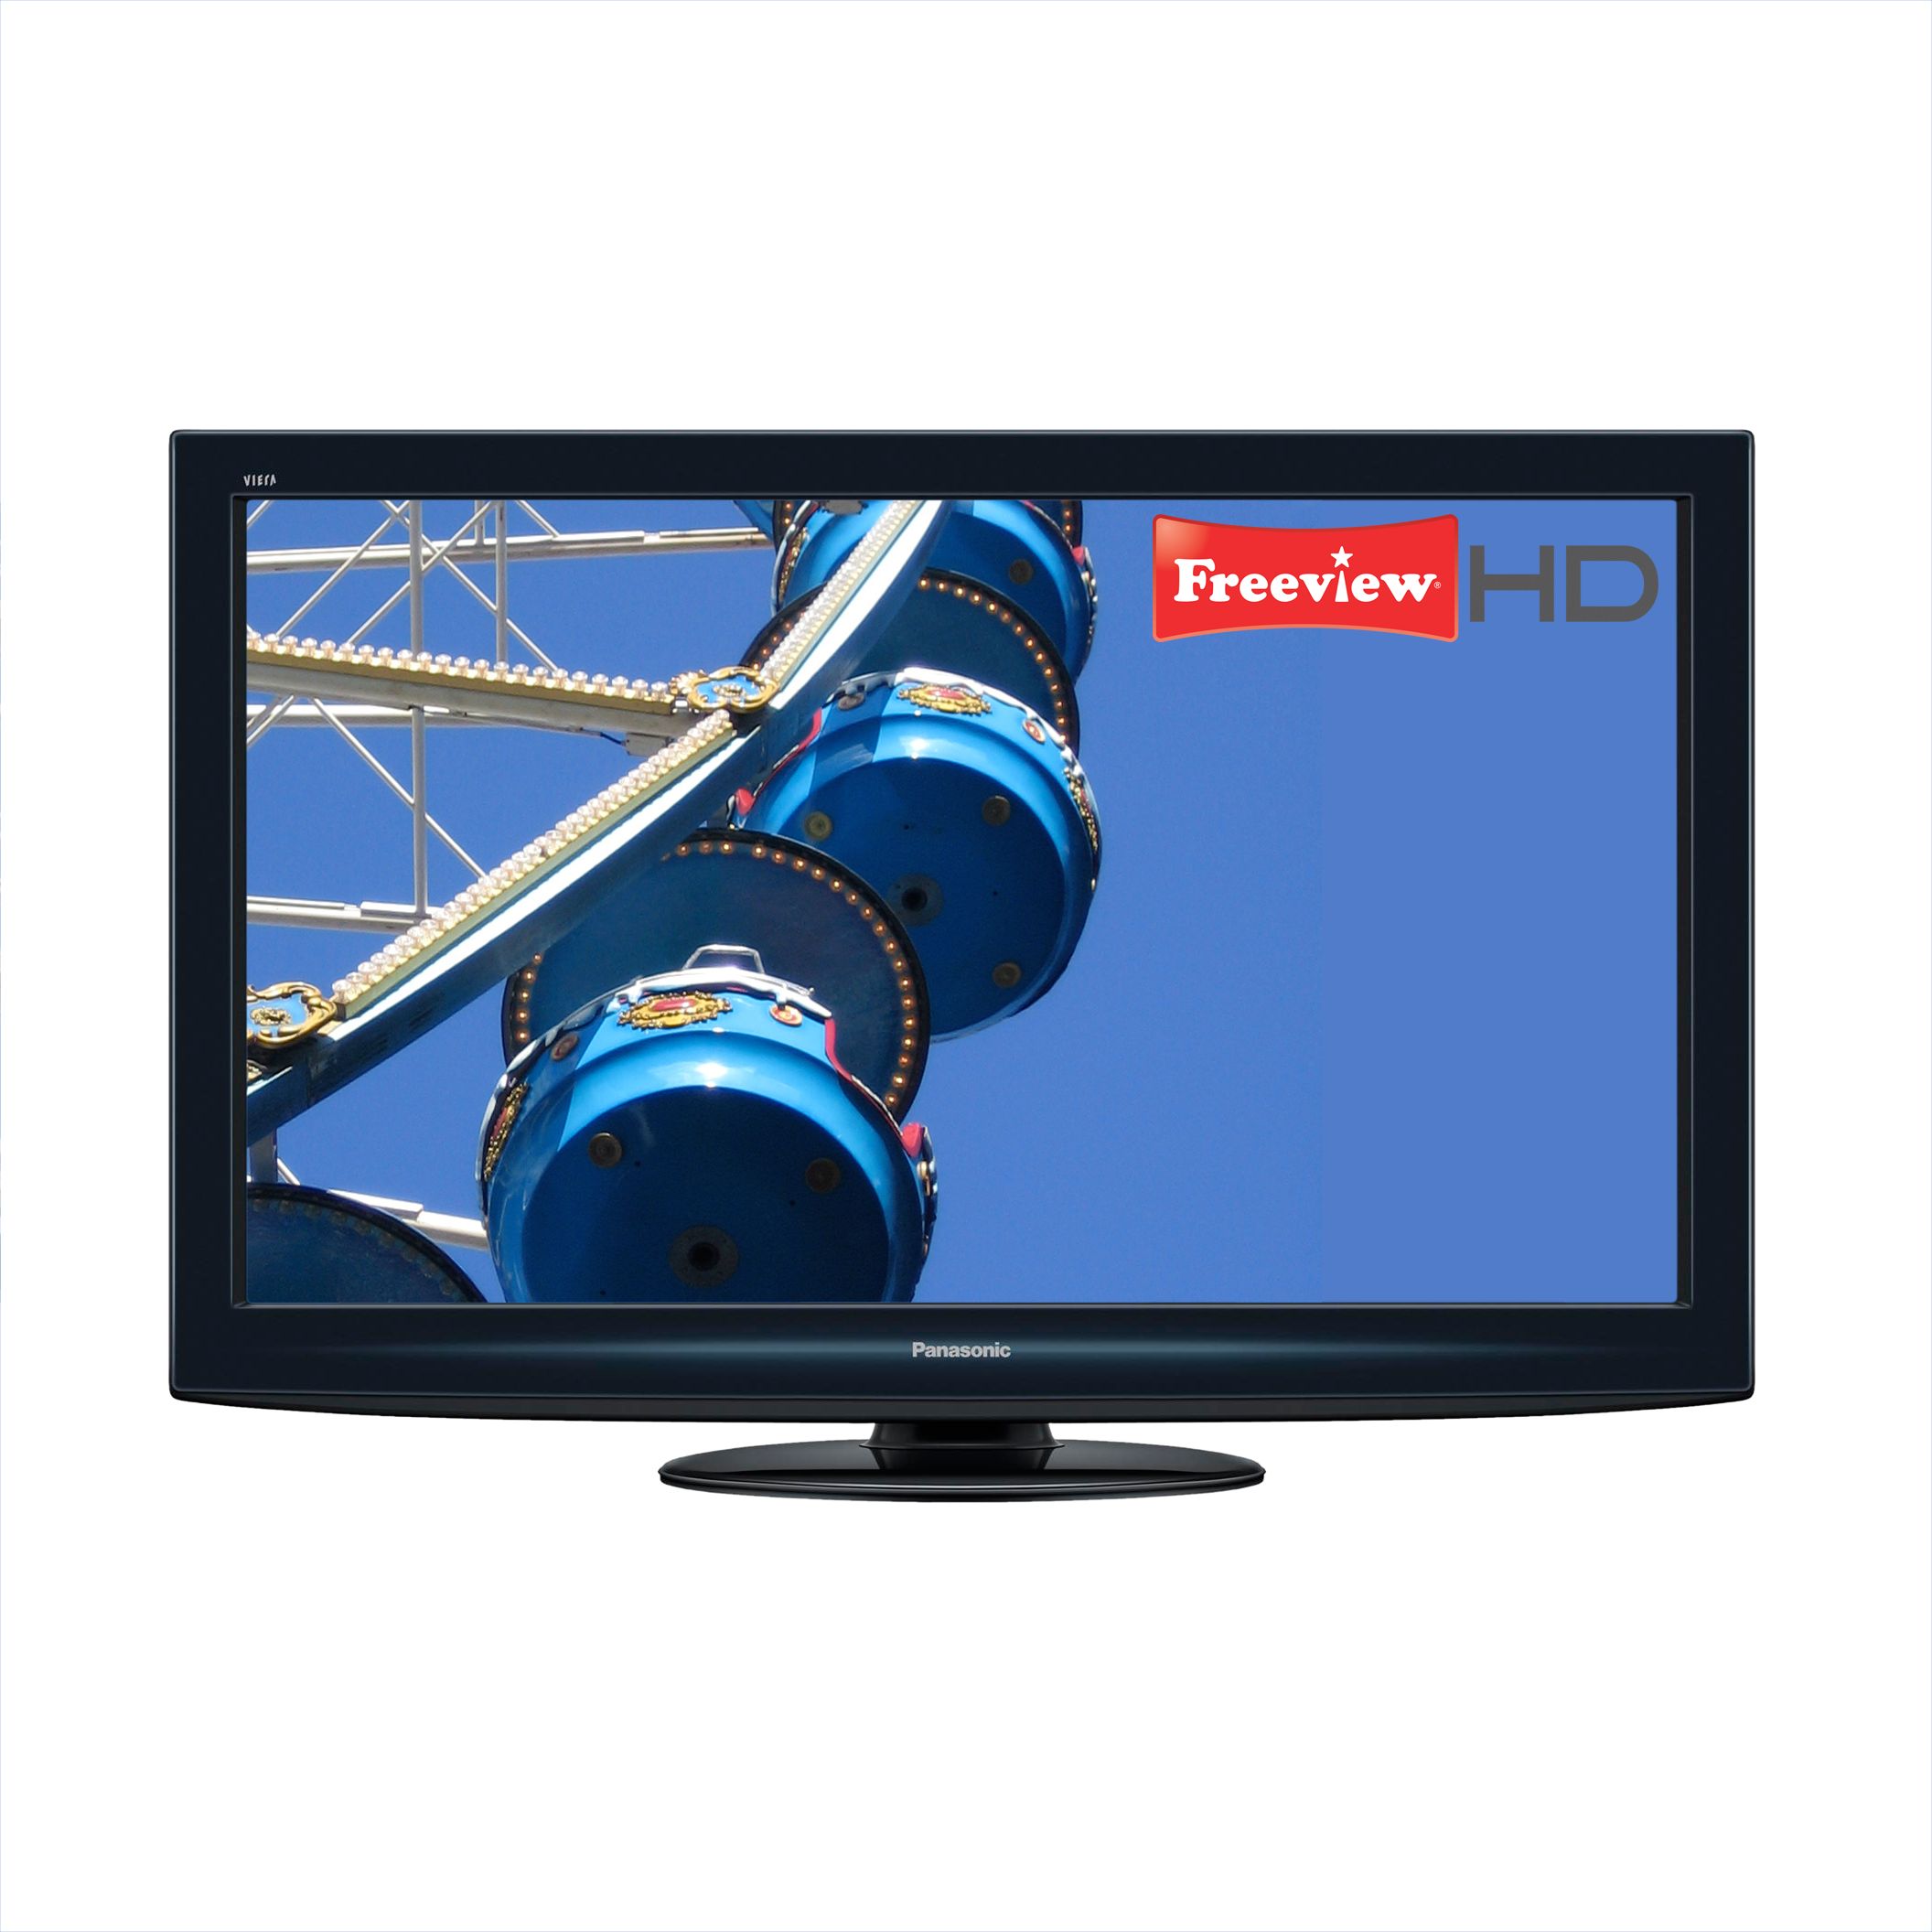 Panasonic Viera TX-P42G20B Plasma HD 1080p TV, 42" with Built-in freesat & Freeview HD at John Lewis